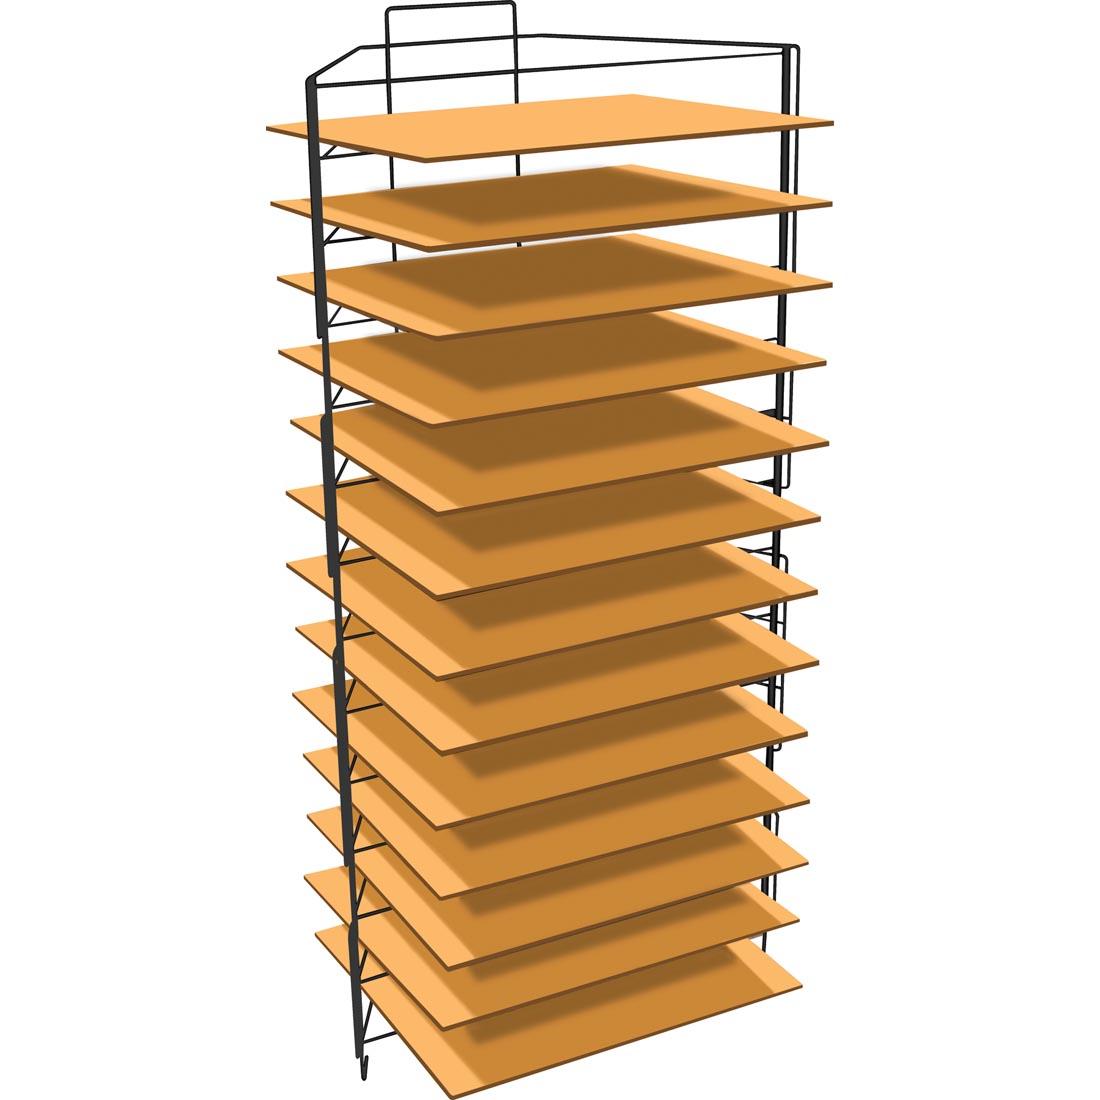 13-Shelf Drying & Storage Rack shown with panels on each shelf